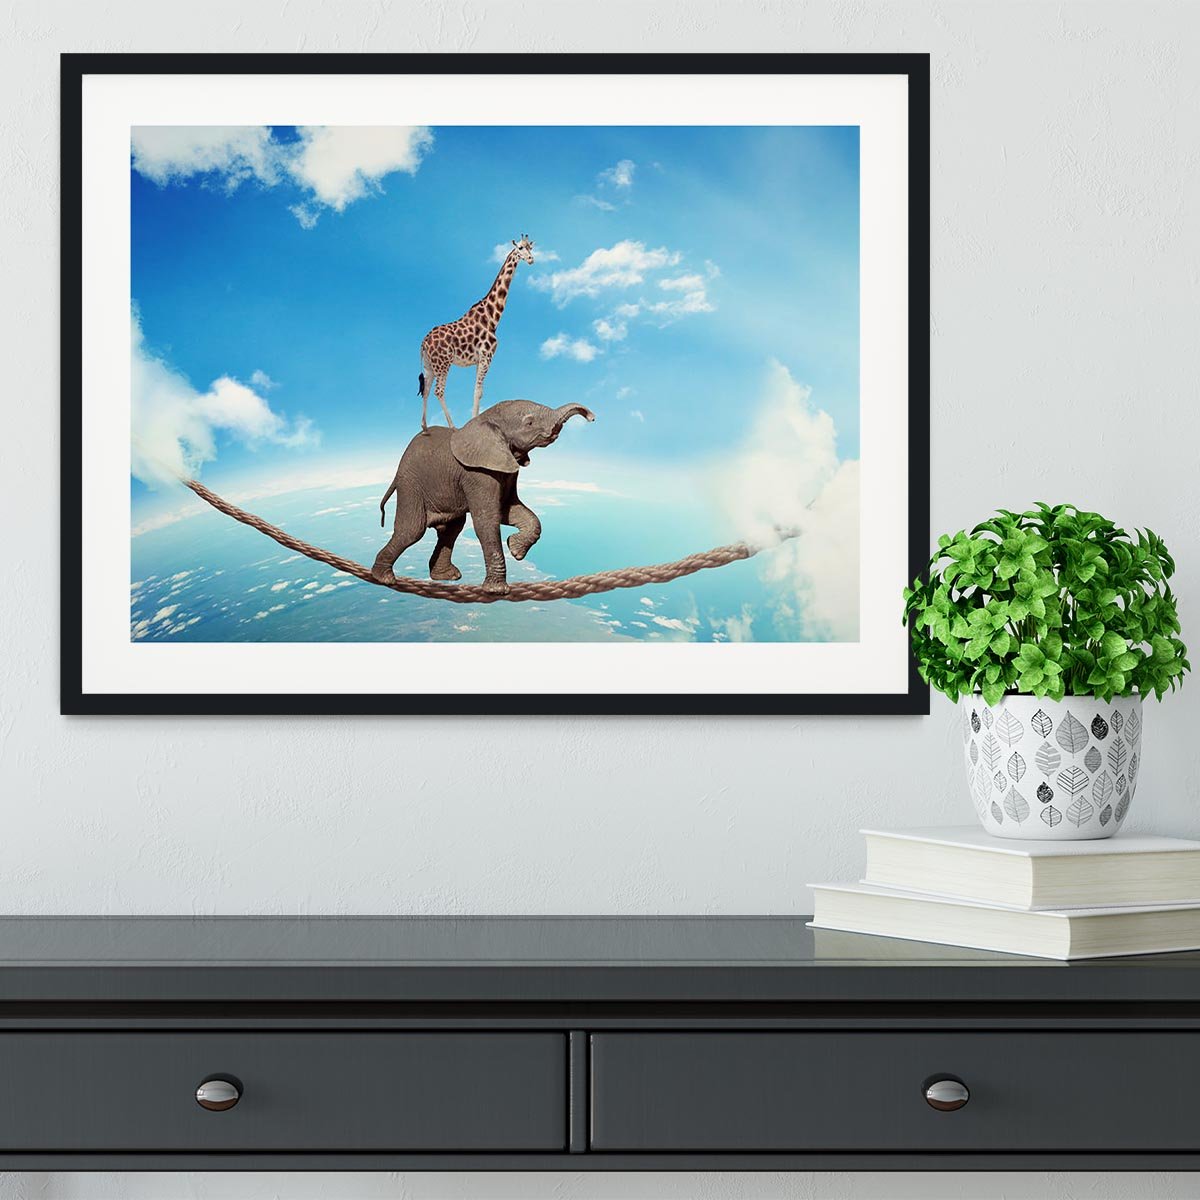 Elephant with giraffe walking on dangerous rope high in sky Framed Print - Canvas Art Rocks - 1